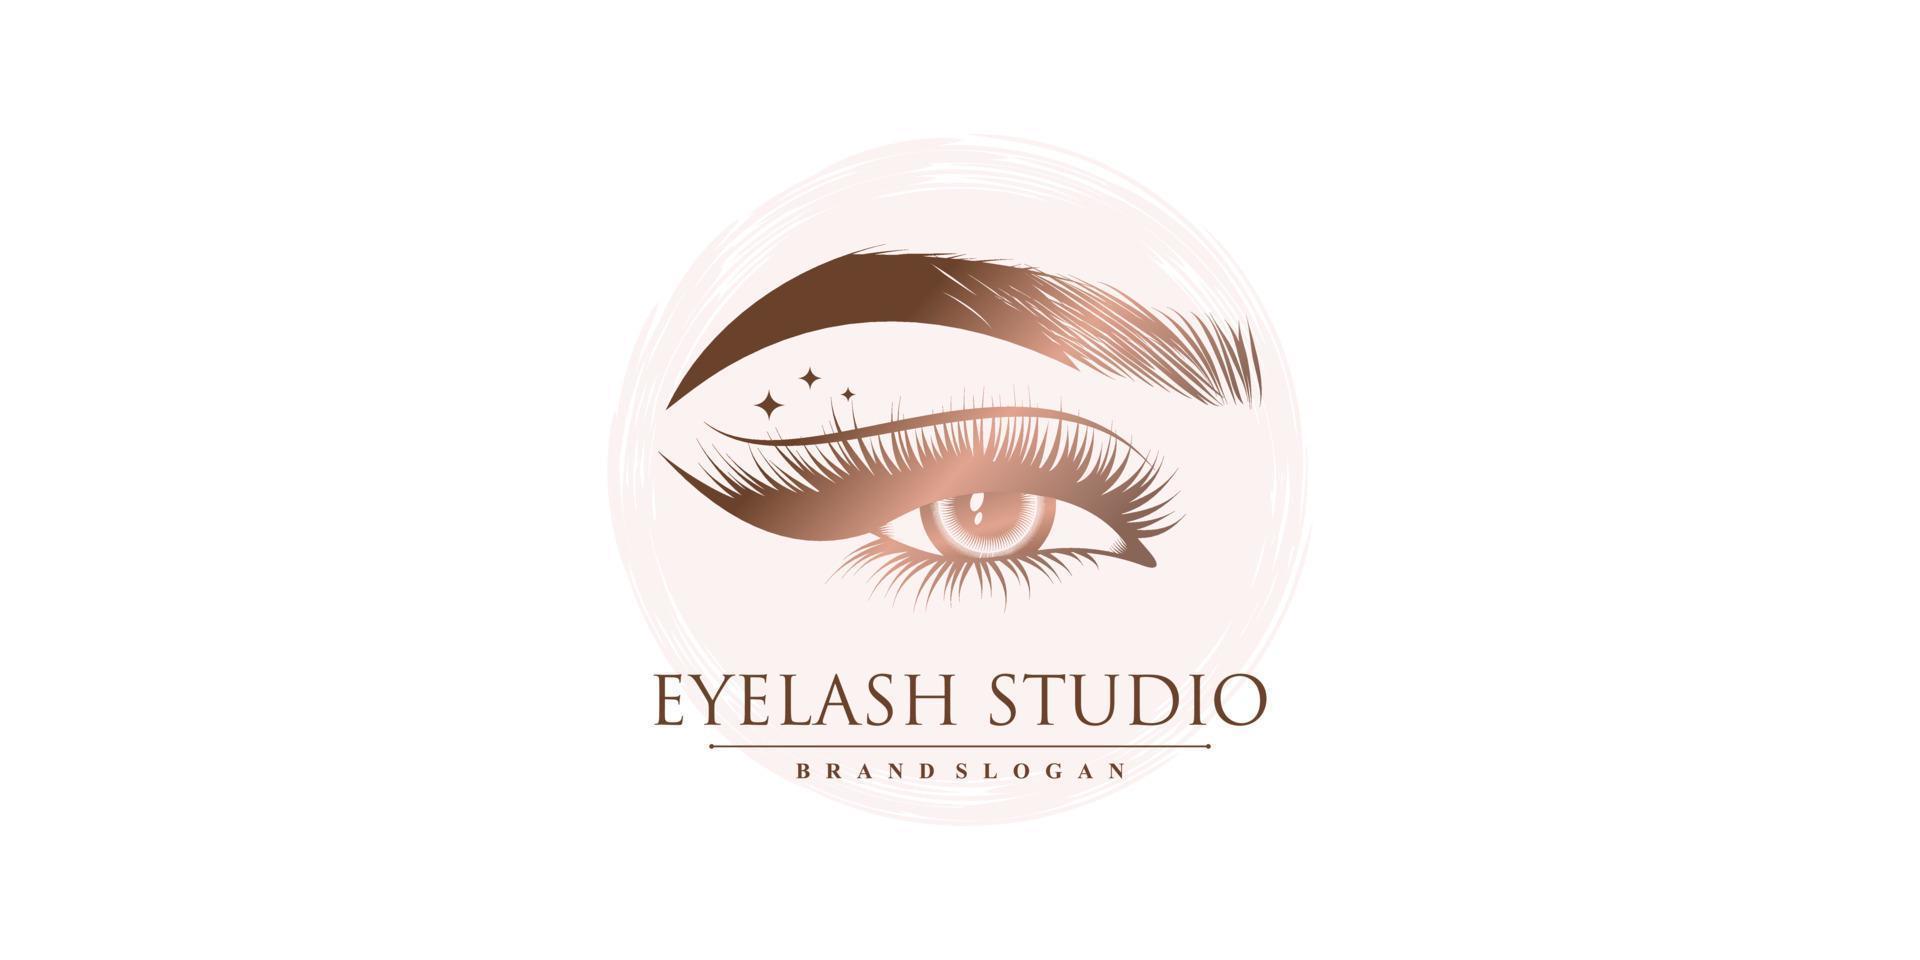 Beauty eyelash logo design Premium Vector